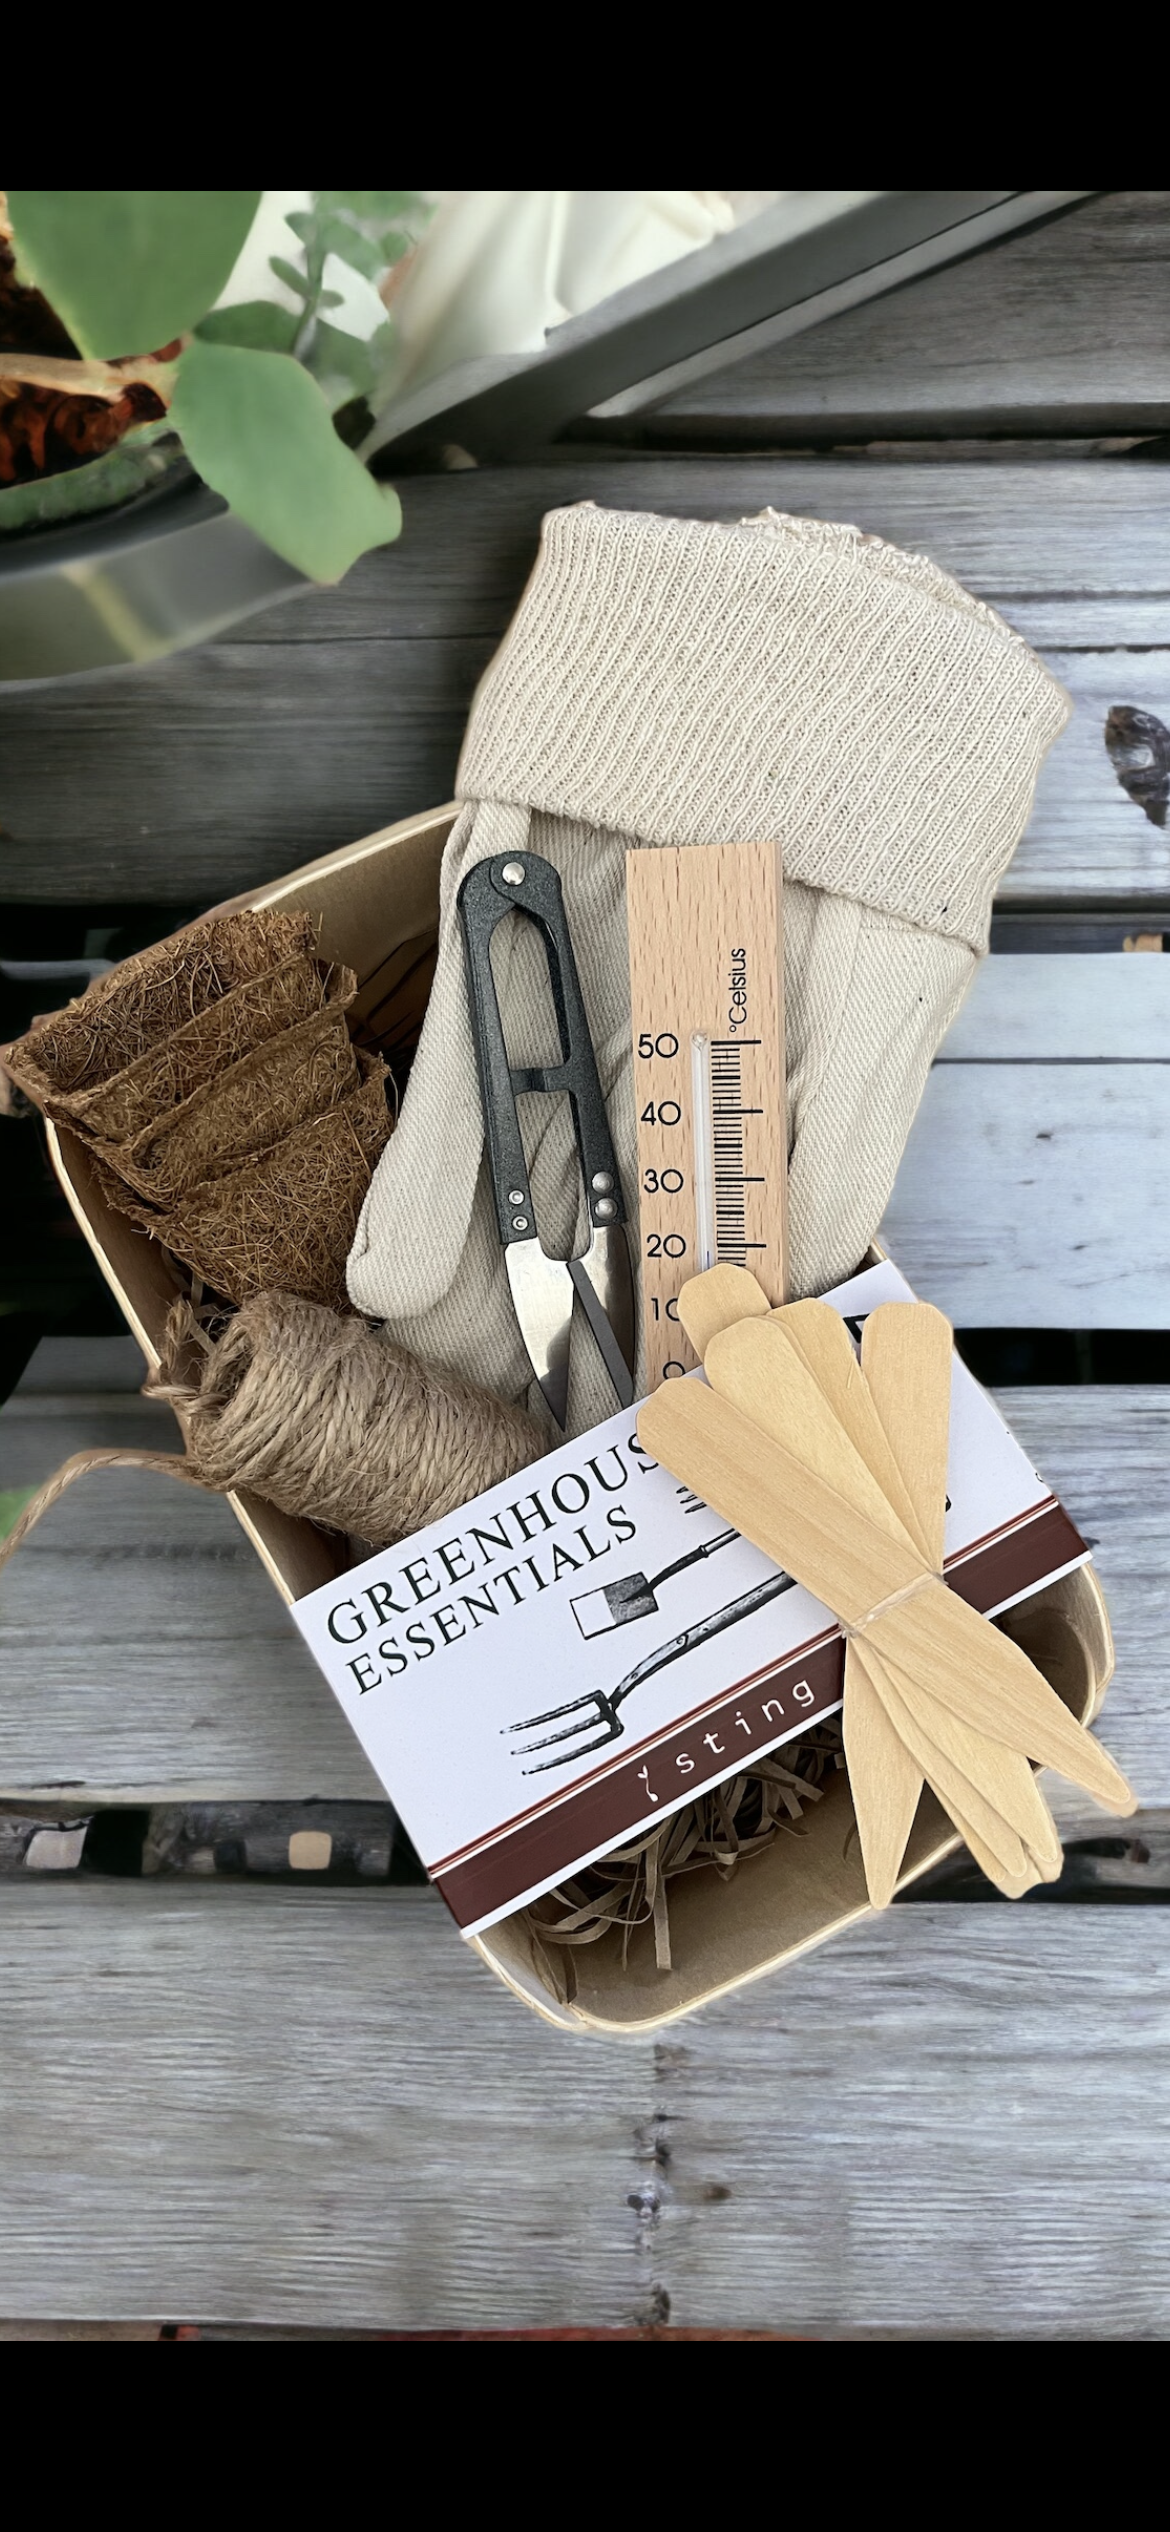 Greenhouse Essentials Gift Set | Gift for Gardener'ss